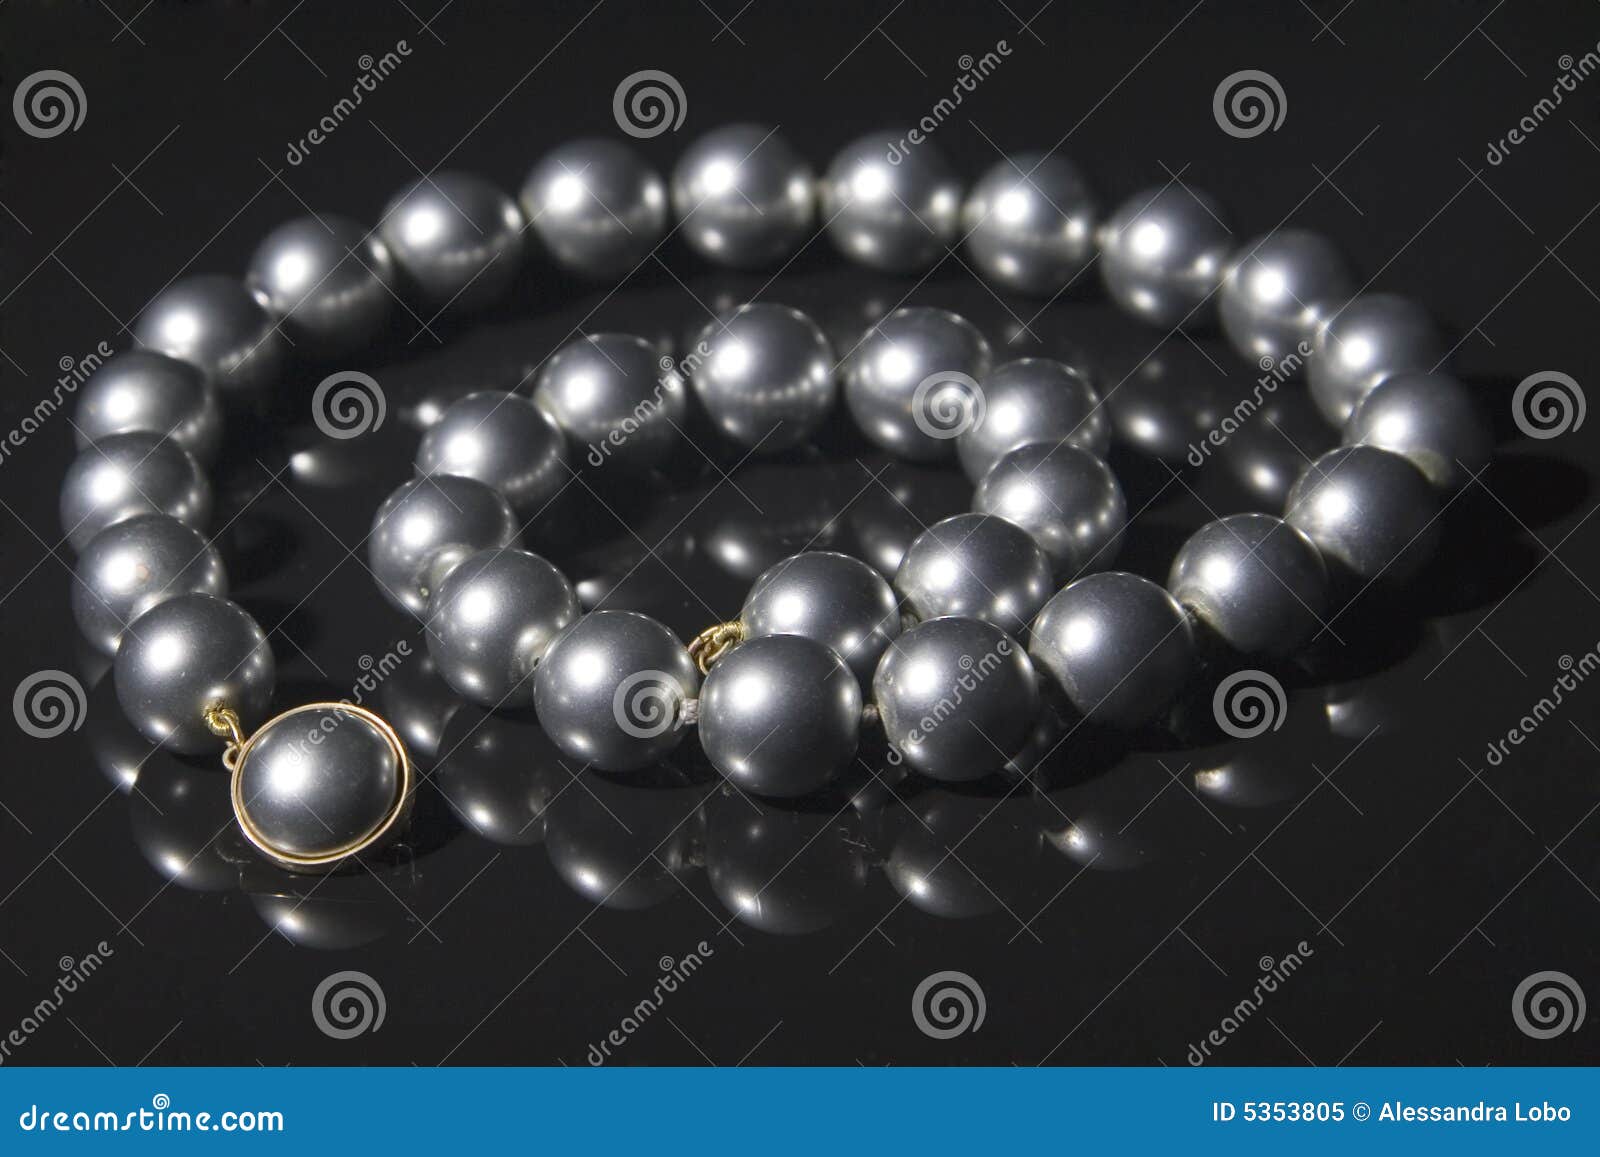 black pearls necklace